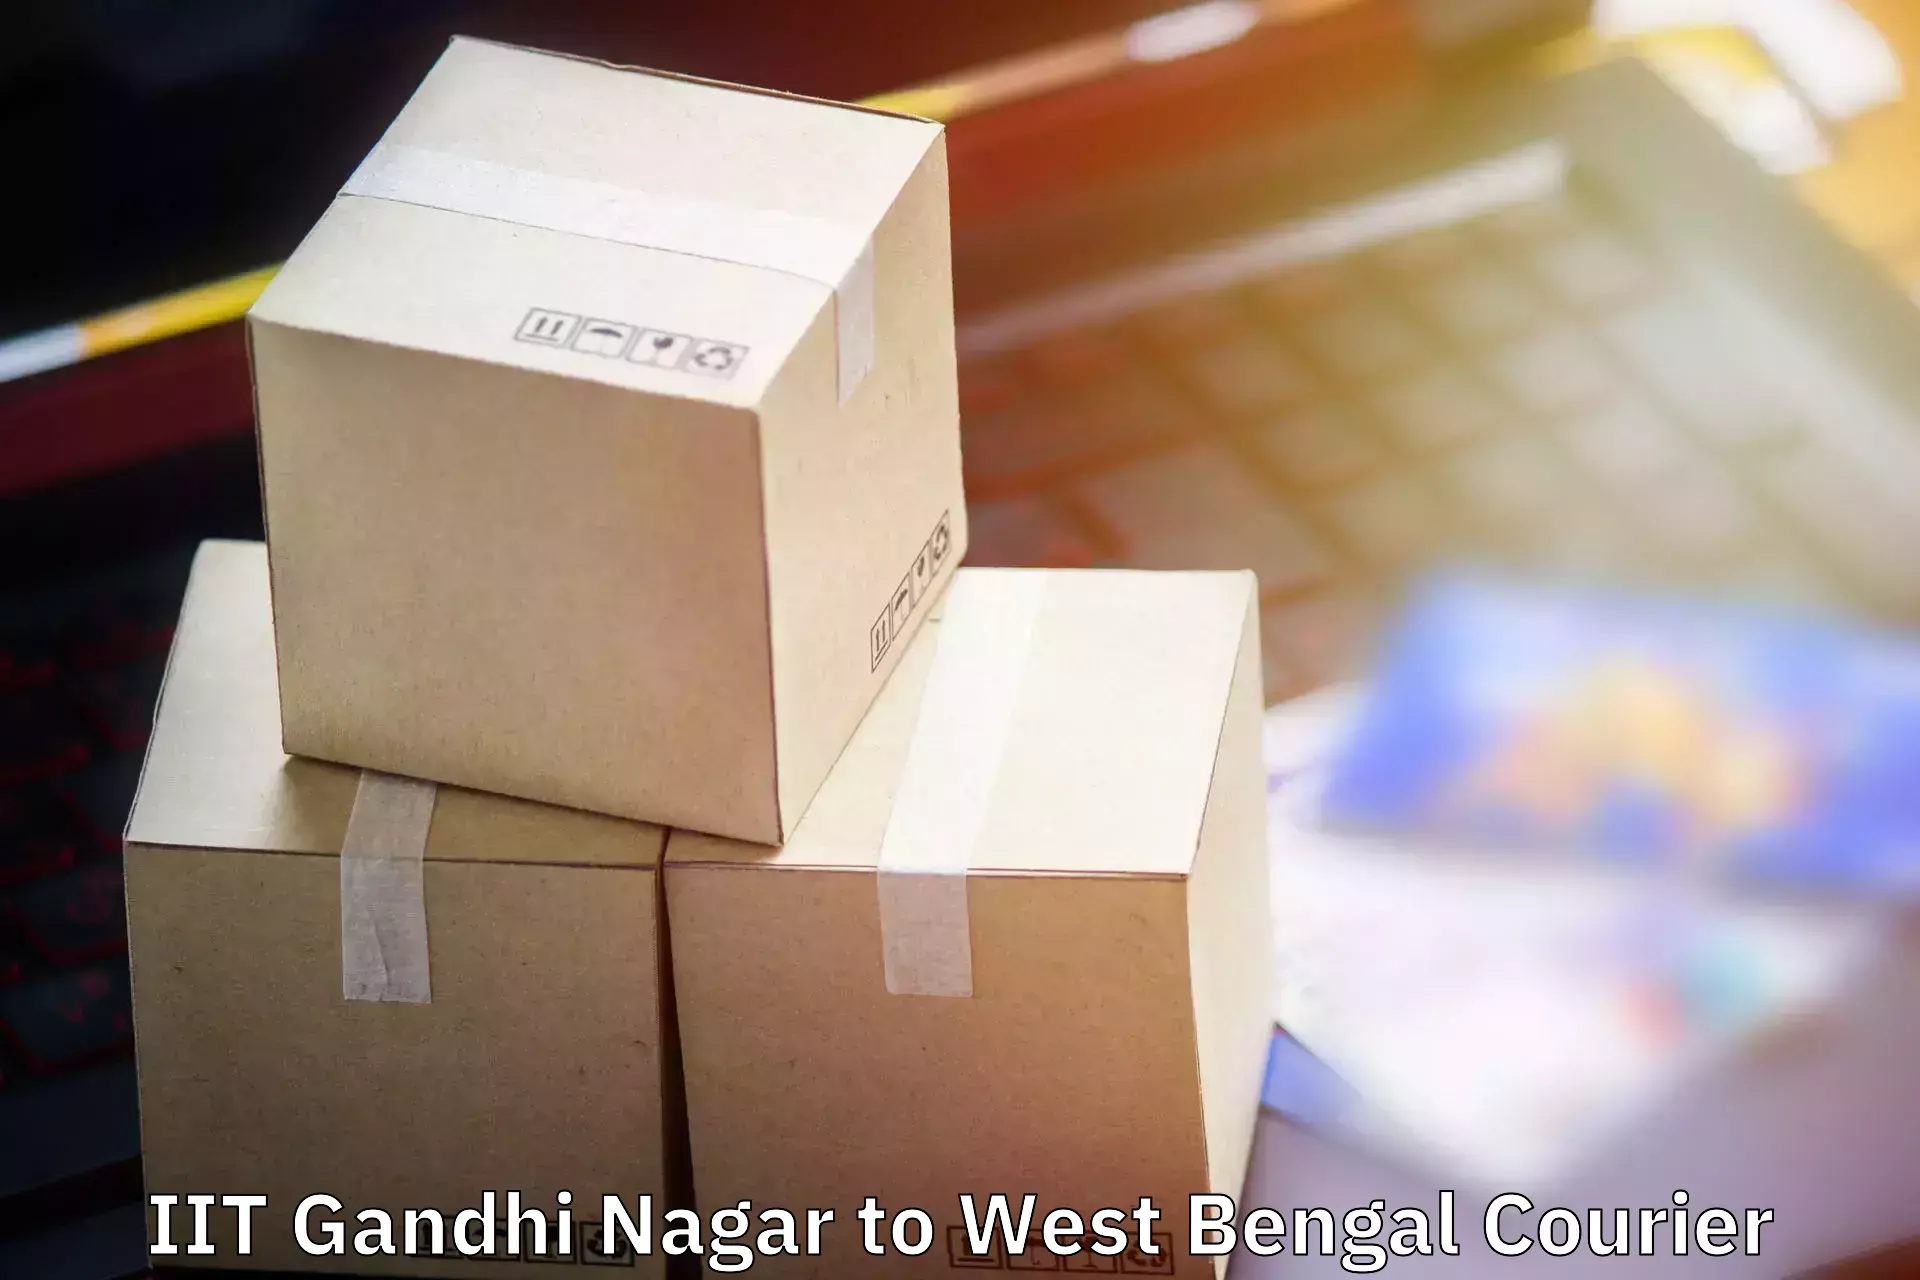 Personal effects shipping IIT Gandhi Nagar to Siliguri